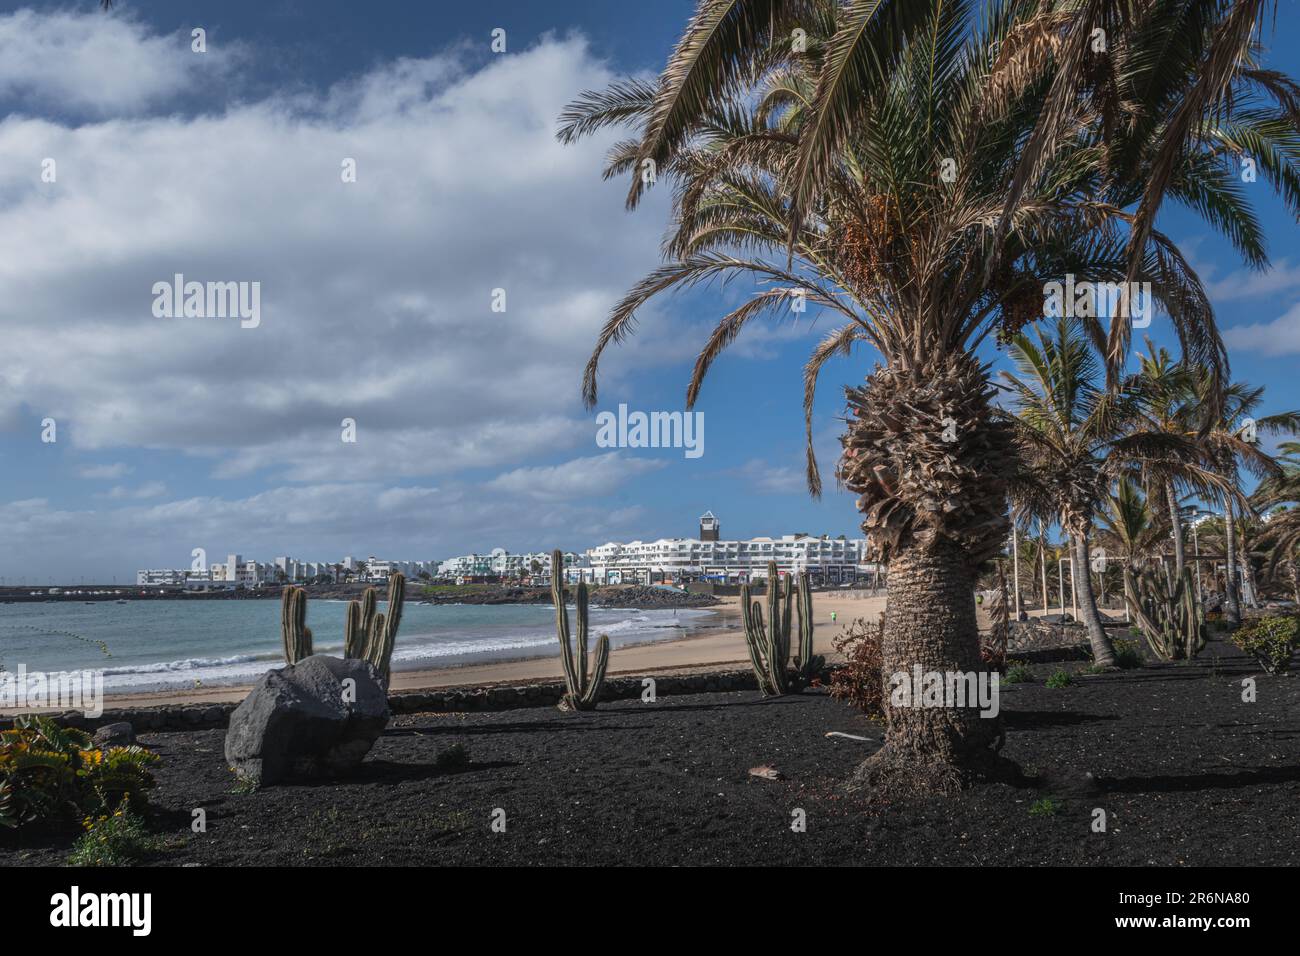 Promenade in Costa Teguise, Lanzarote, Canary Islands Stock Photo